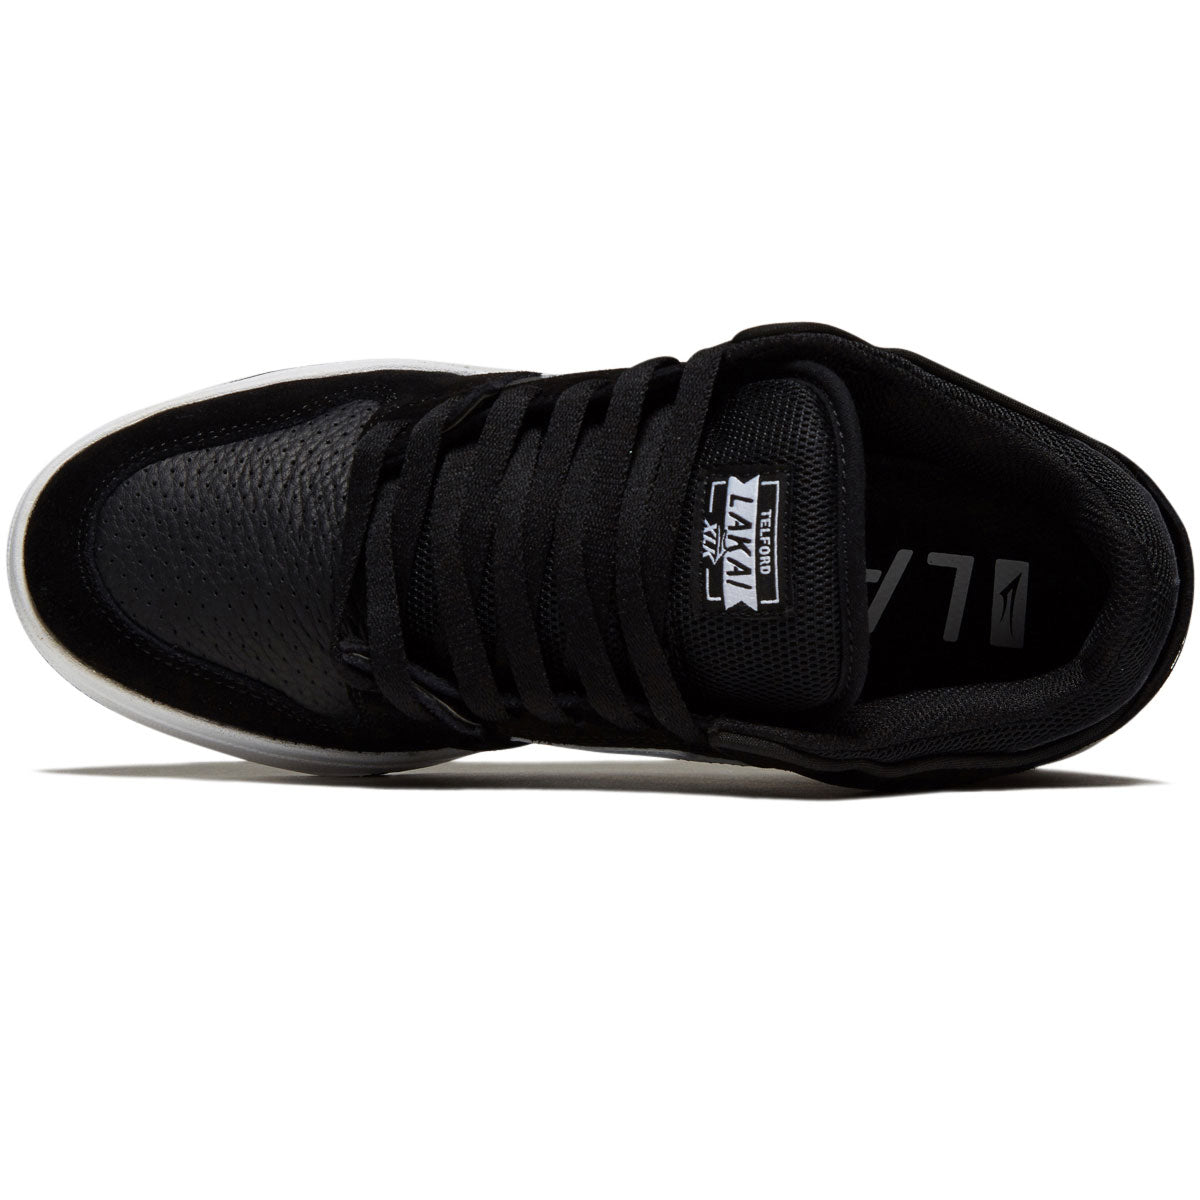 Lakai Telford Low Shoes - Black Suede image 3